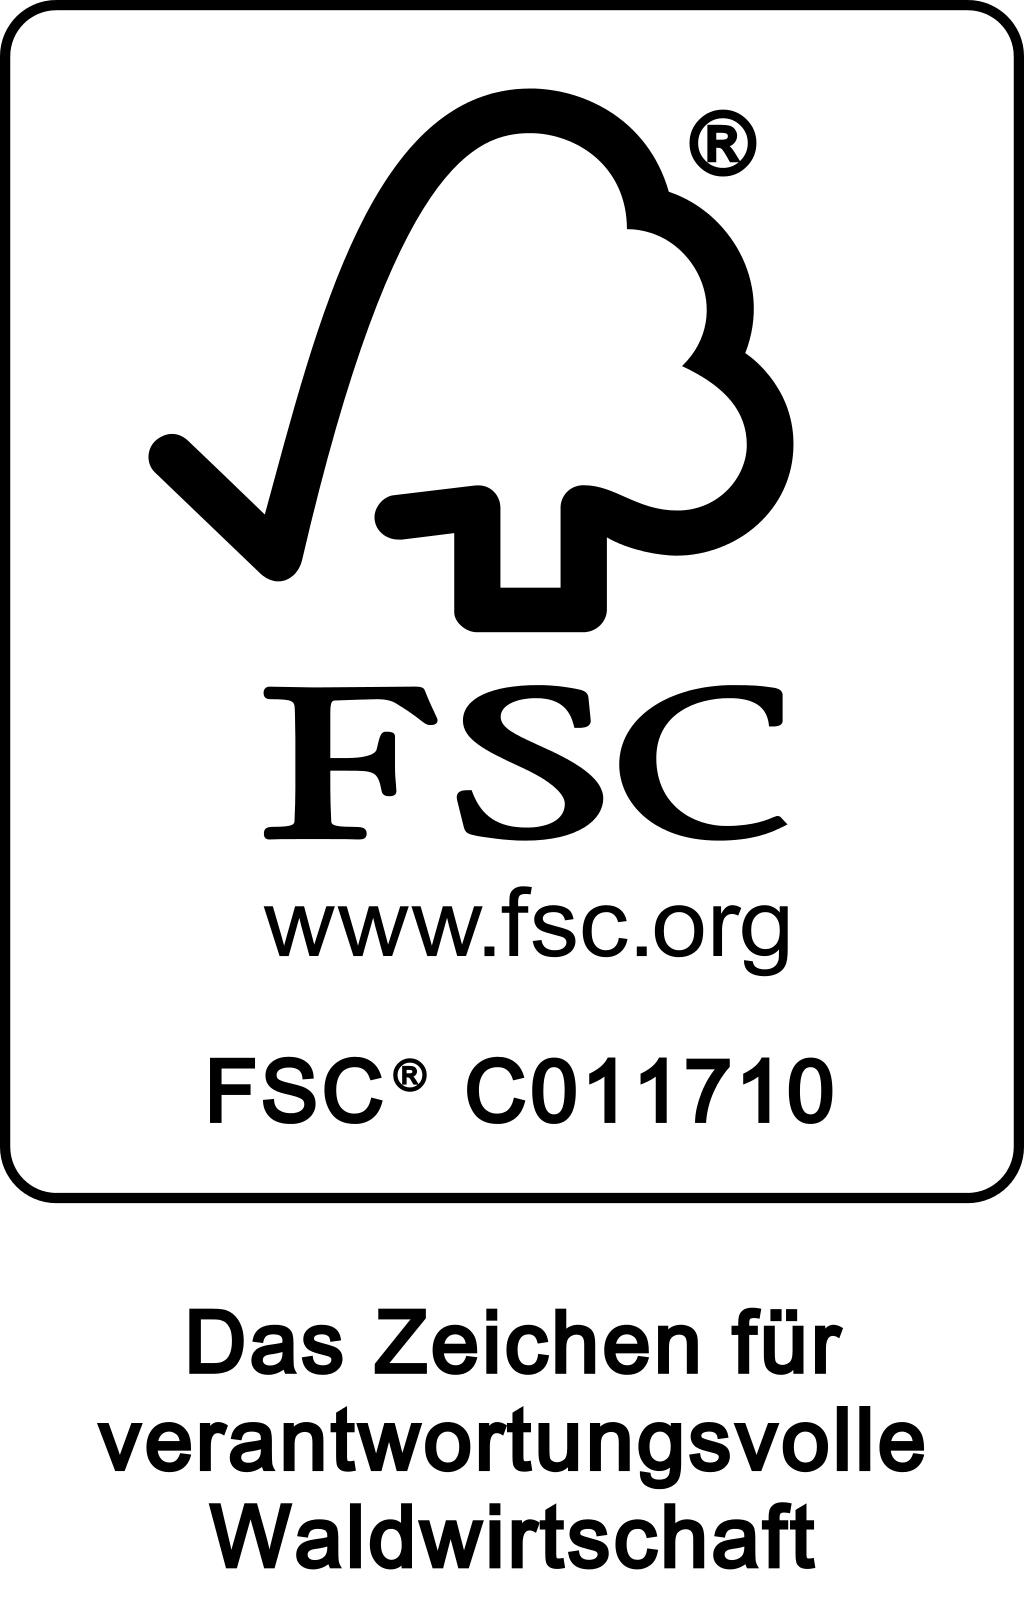 FSC C011710 Promotional With Text Portrait Blackonwhite R Enf4xc